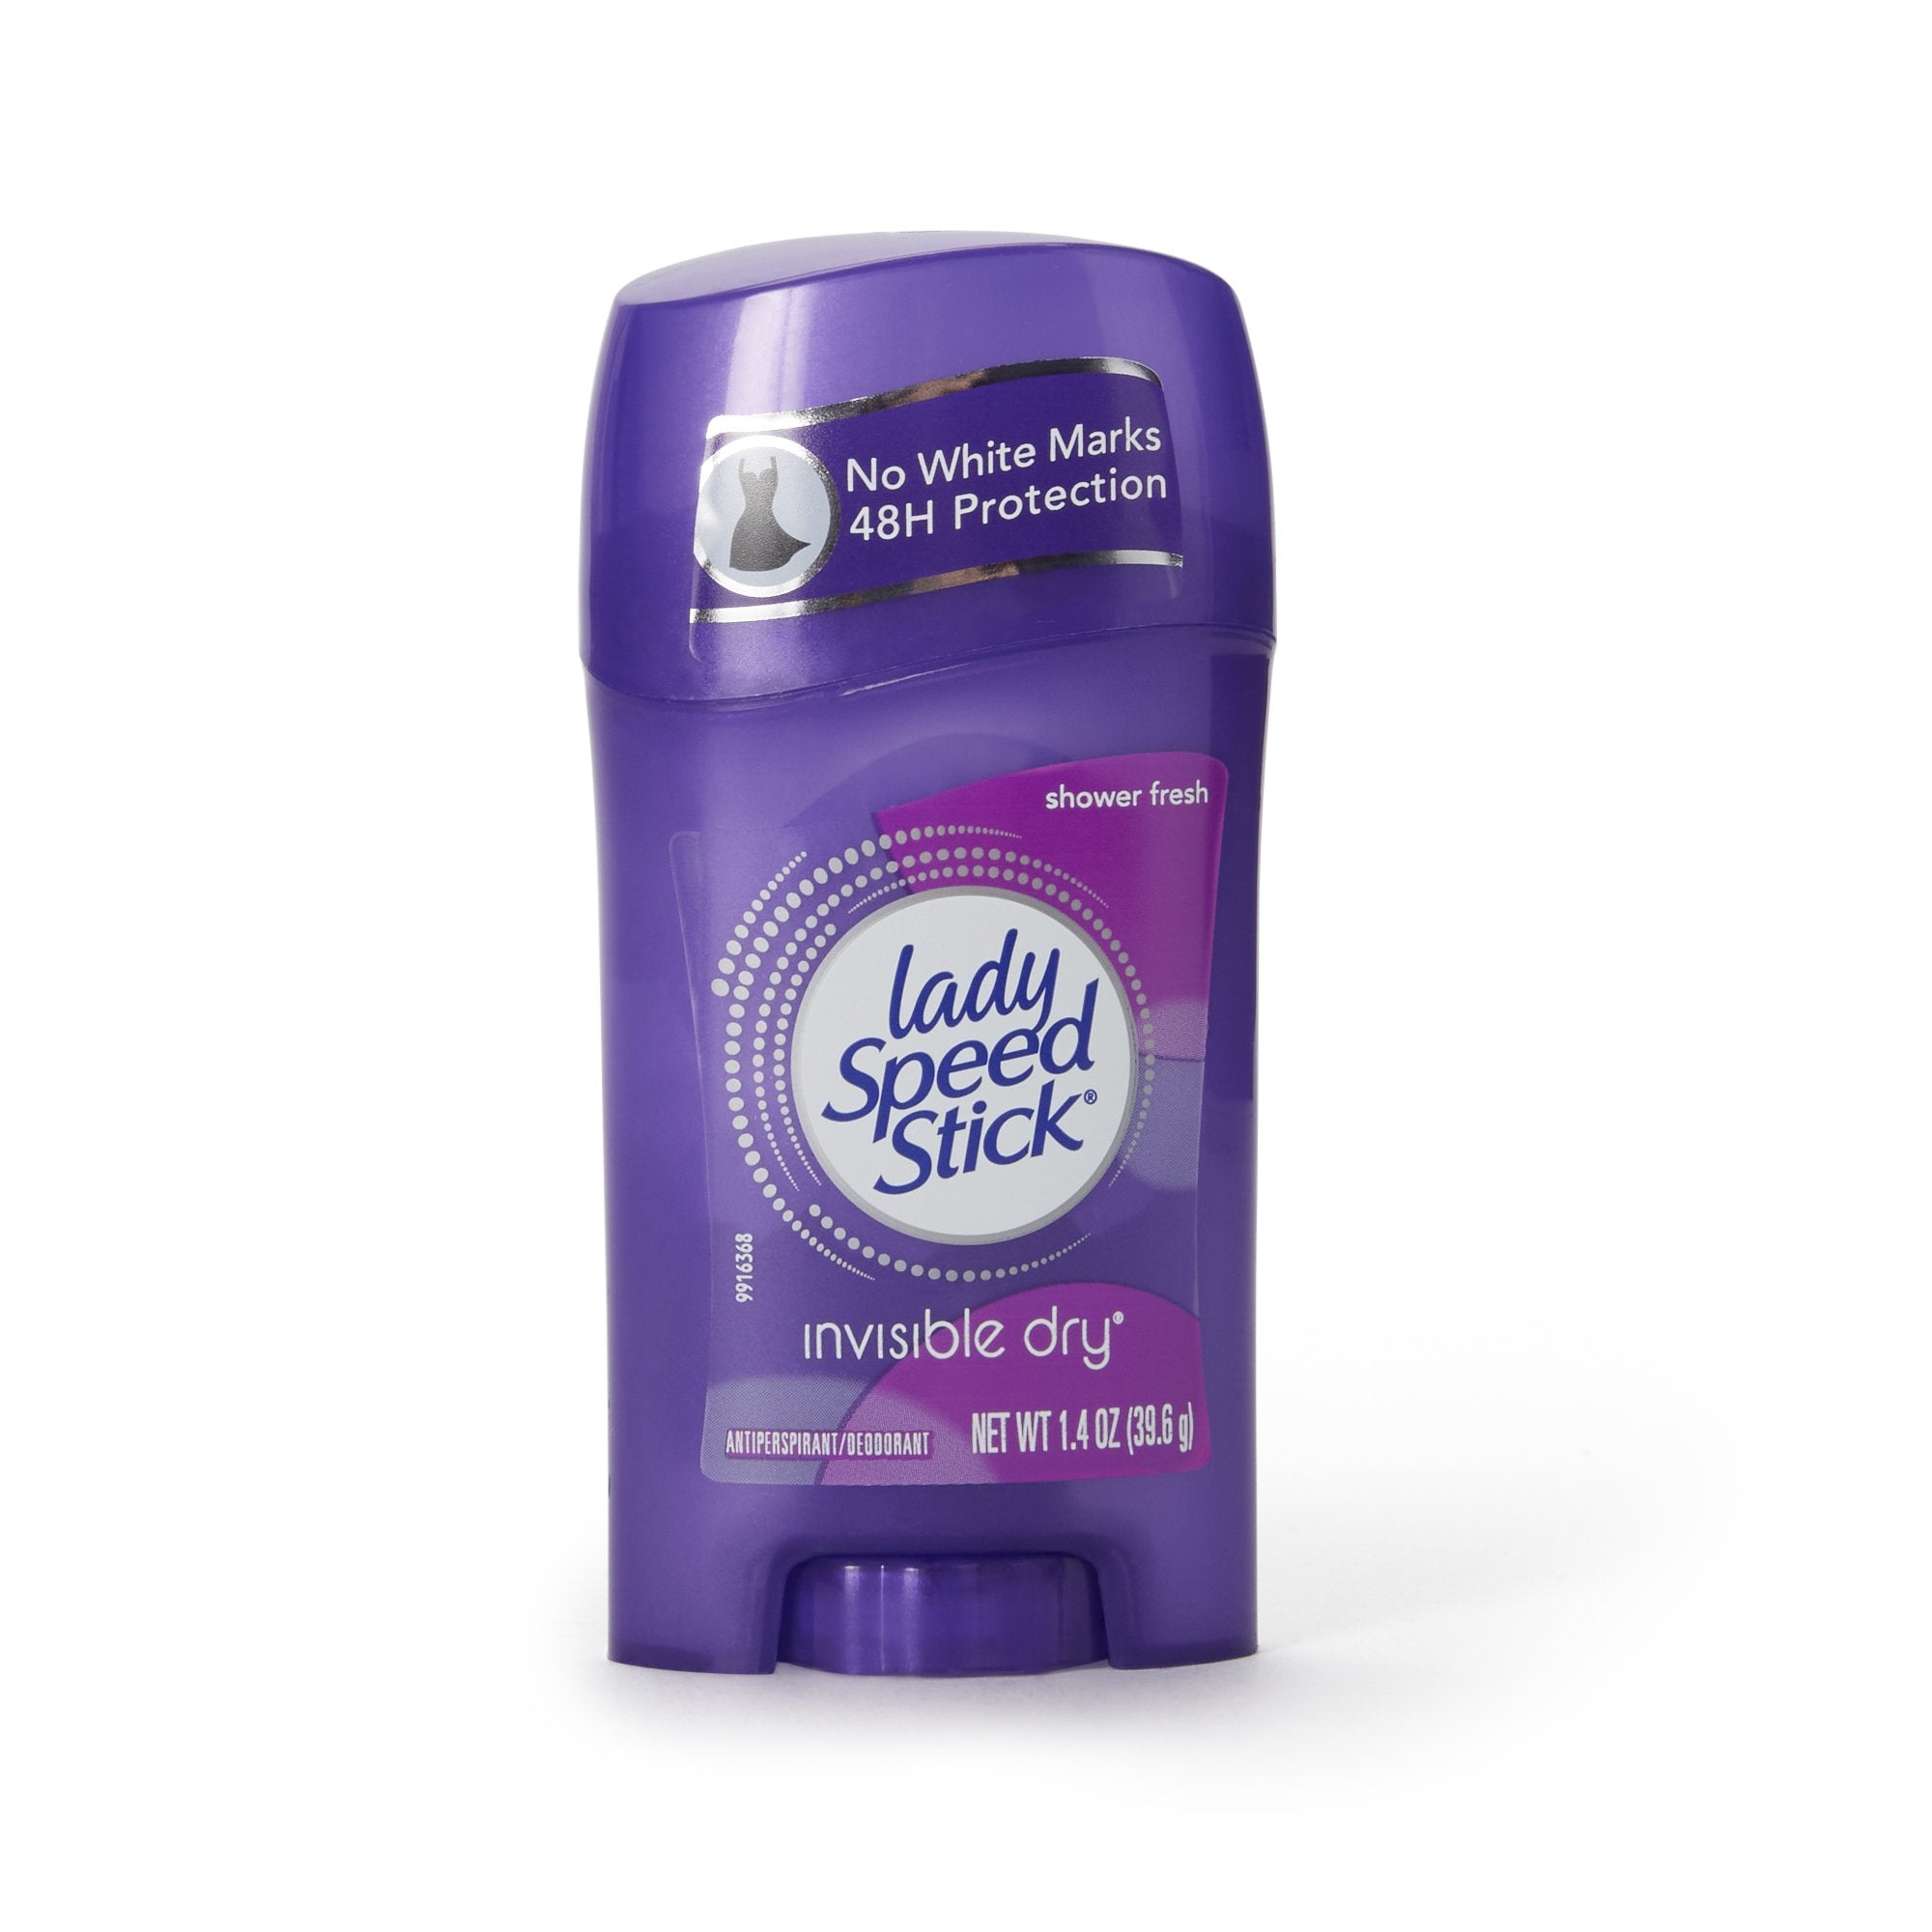 Antiperspirant / Deodorant Lady Speed Stick Solid 1.4 oz. Shower Fresh Scent